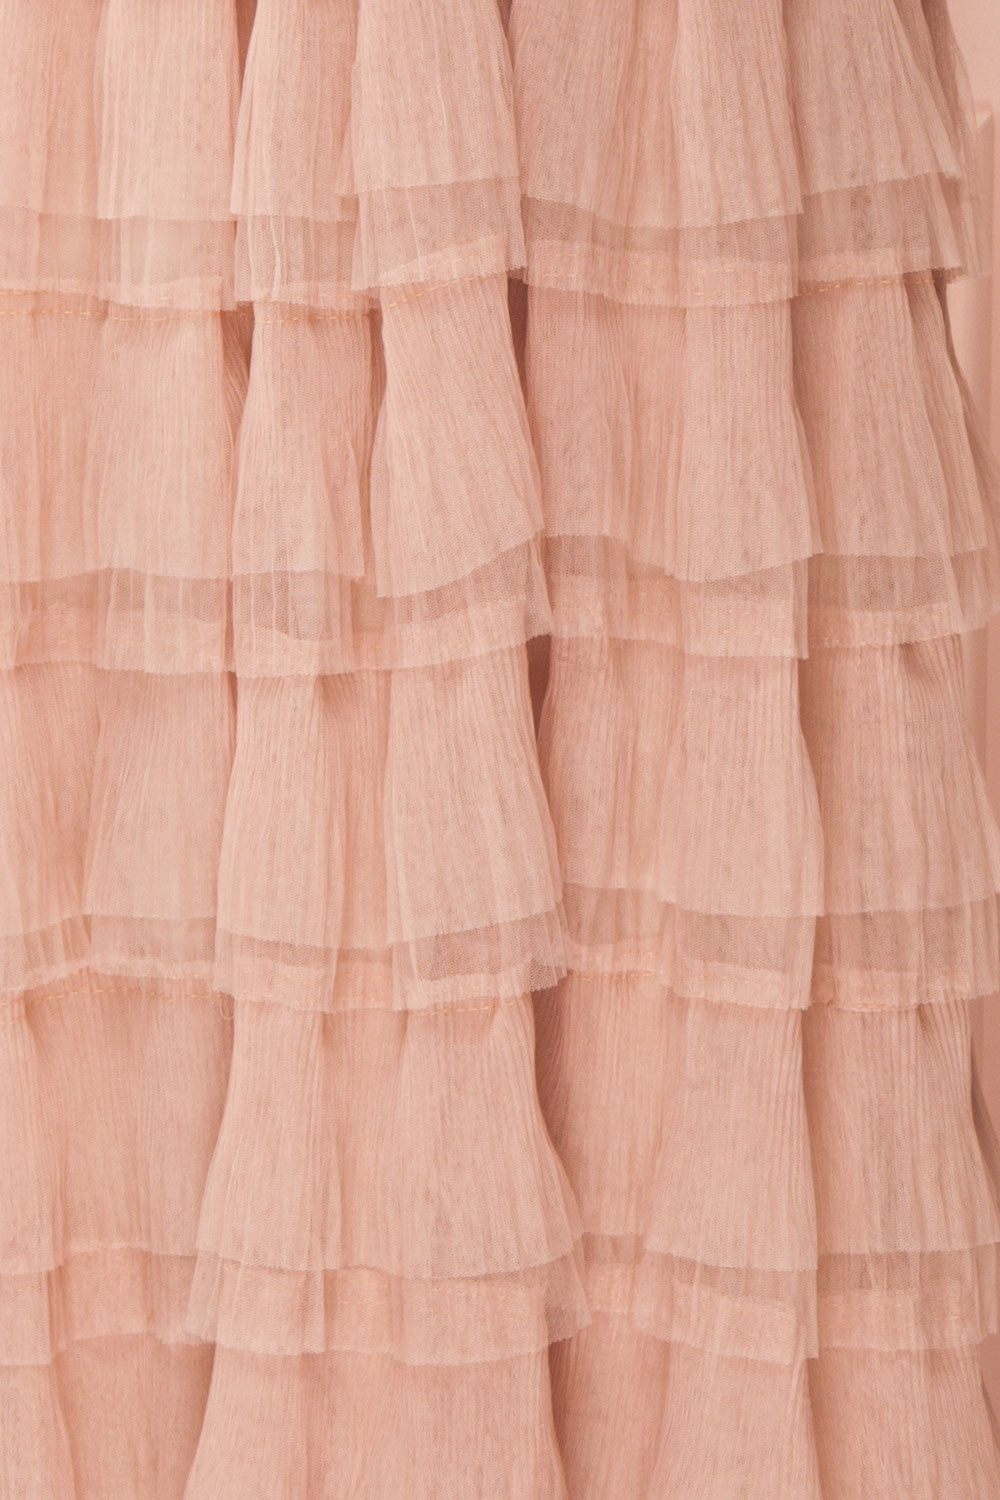 Marisol Blush Mesh Gown w/ Layered Ruffle Skirt | FABRIC DETAIL | Boutique 1861